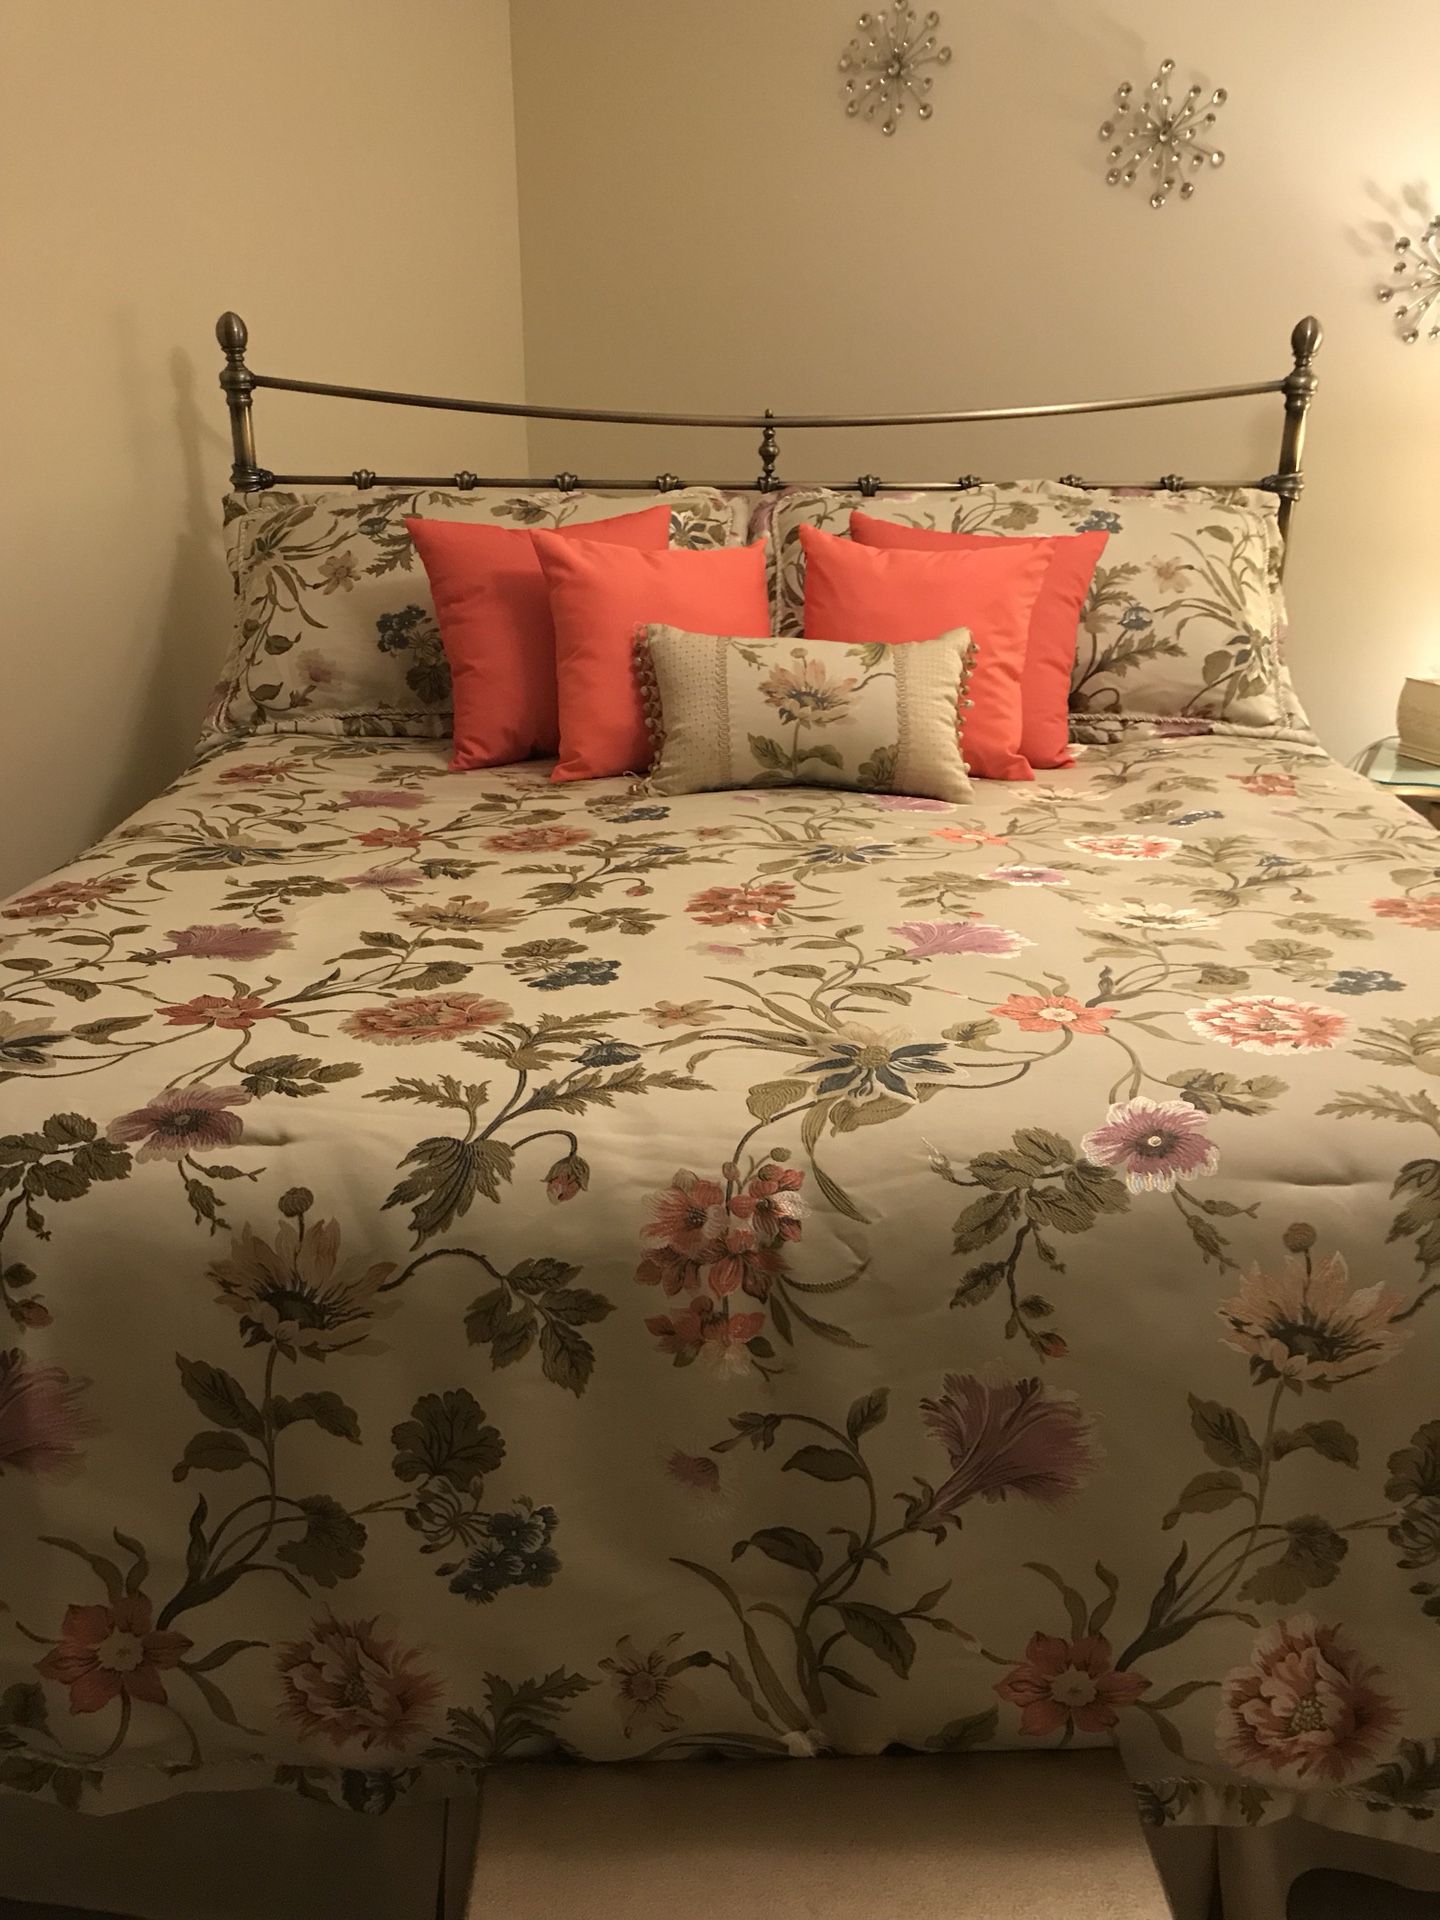 King size comforter, pillow shams, and decorative pillows